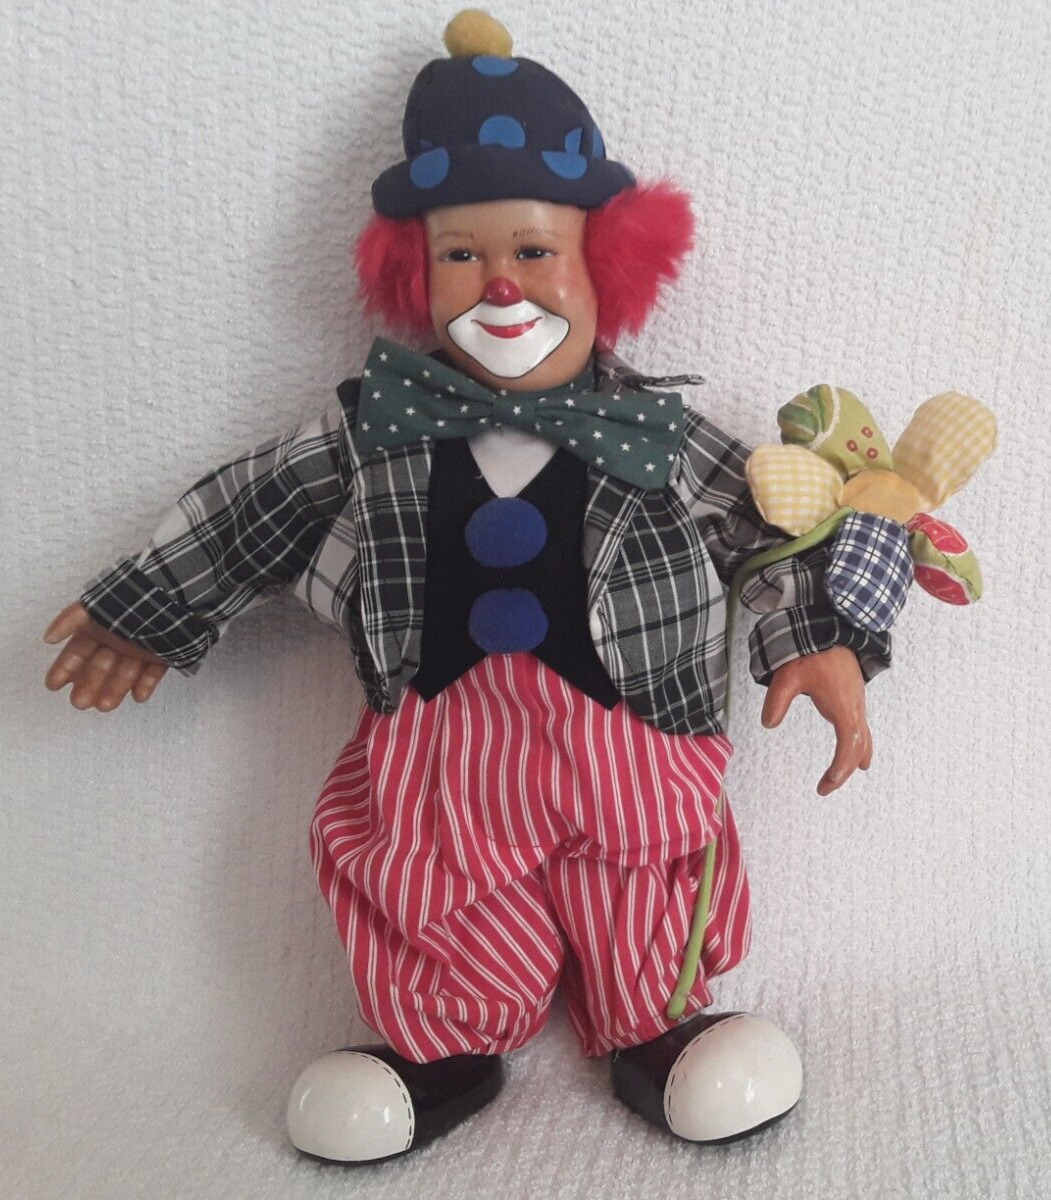 Porcelain Vintage Standing Clown Doll Figurine Lillian Vernon Cloth Body Toy 15”